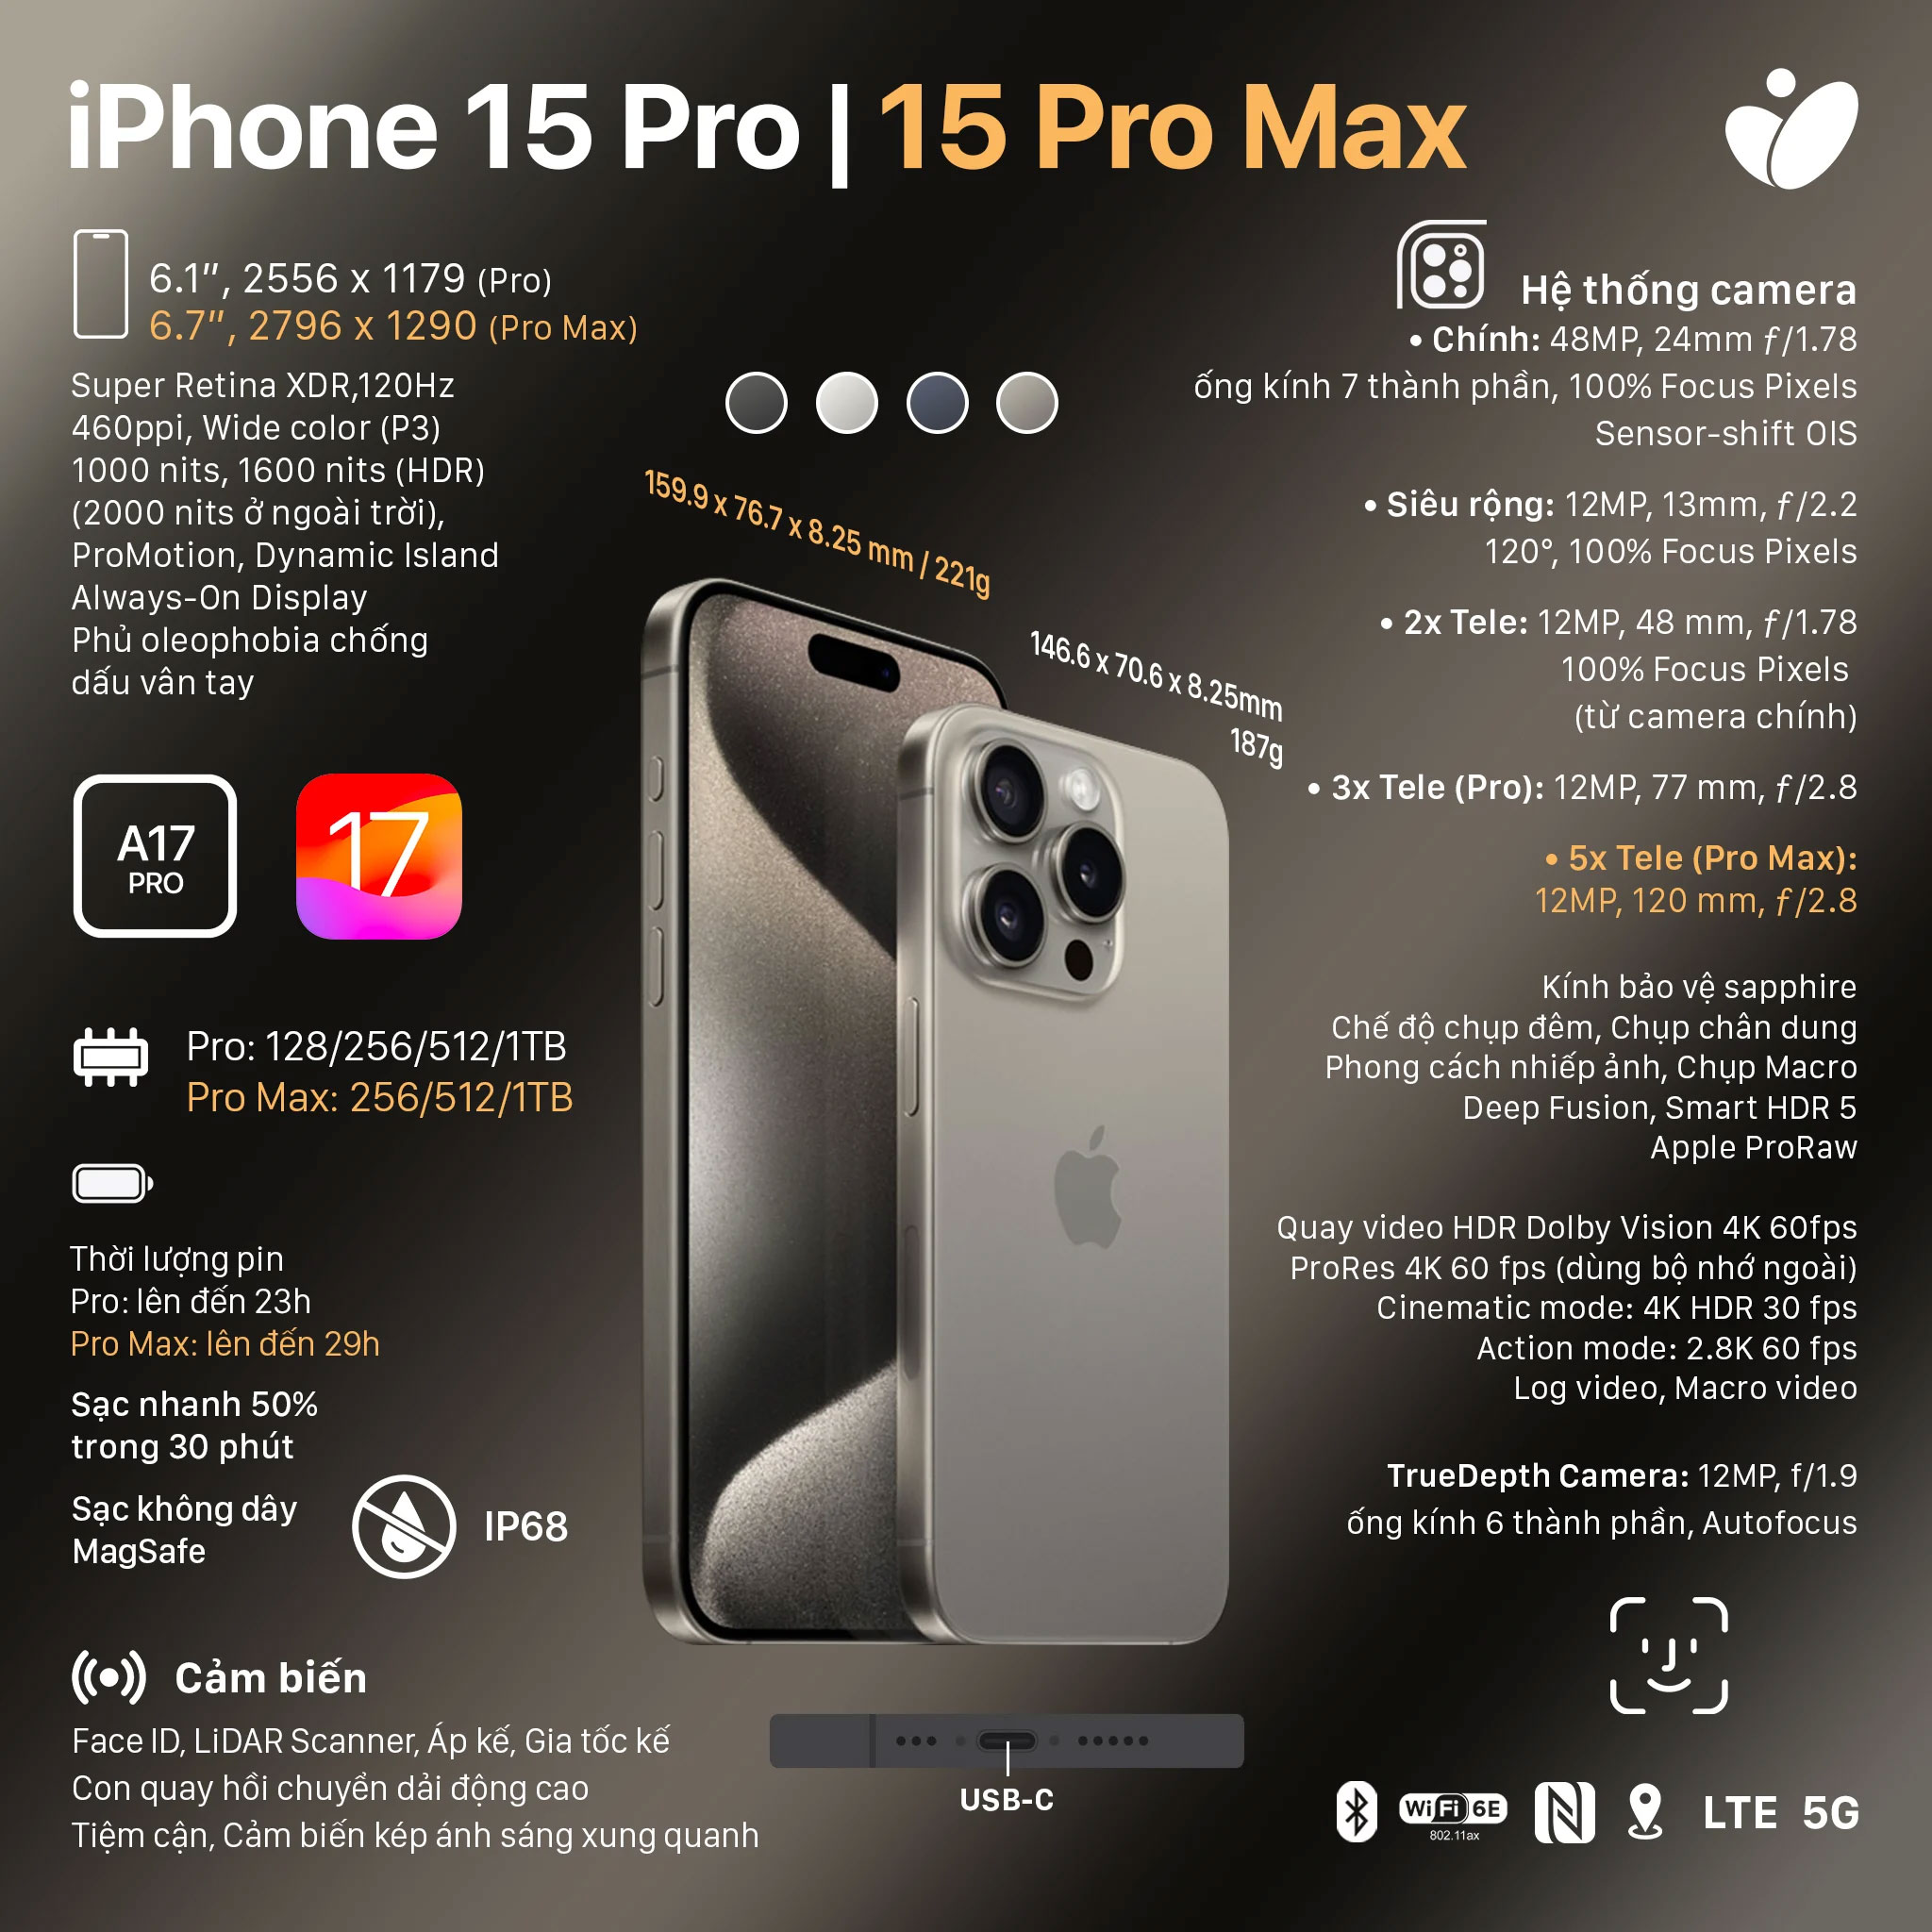 iphone-15-pro-max-info-tinhte.jpg